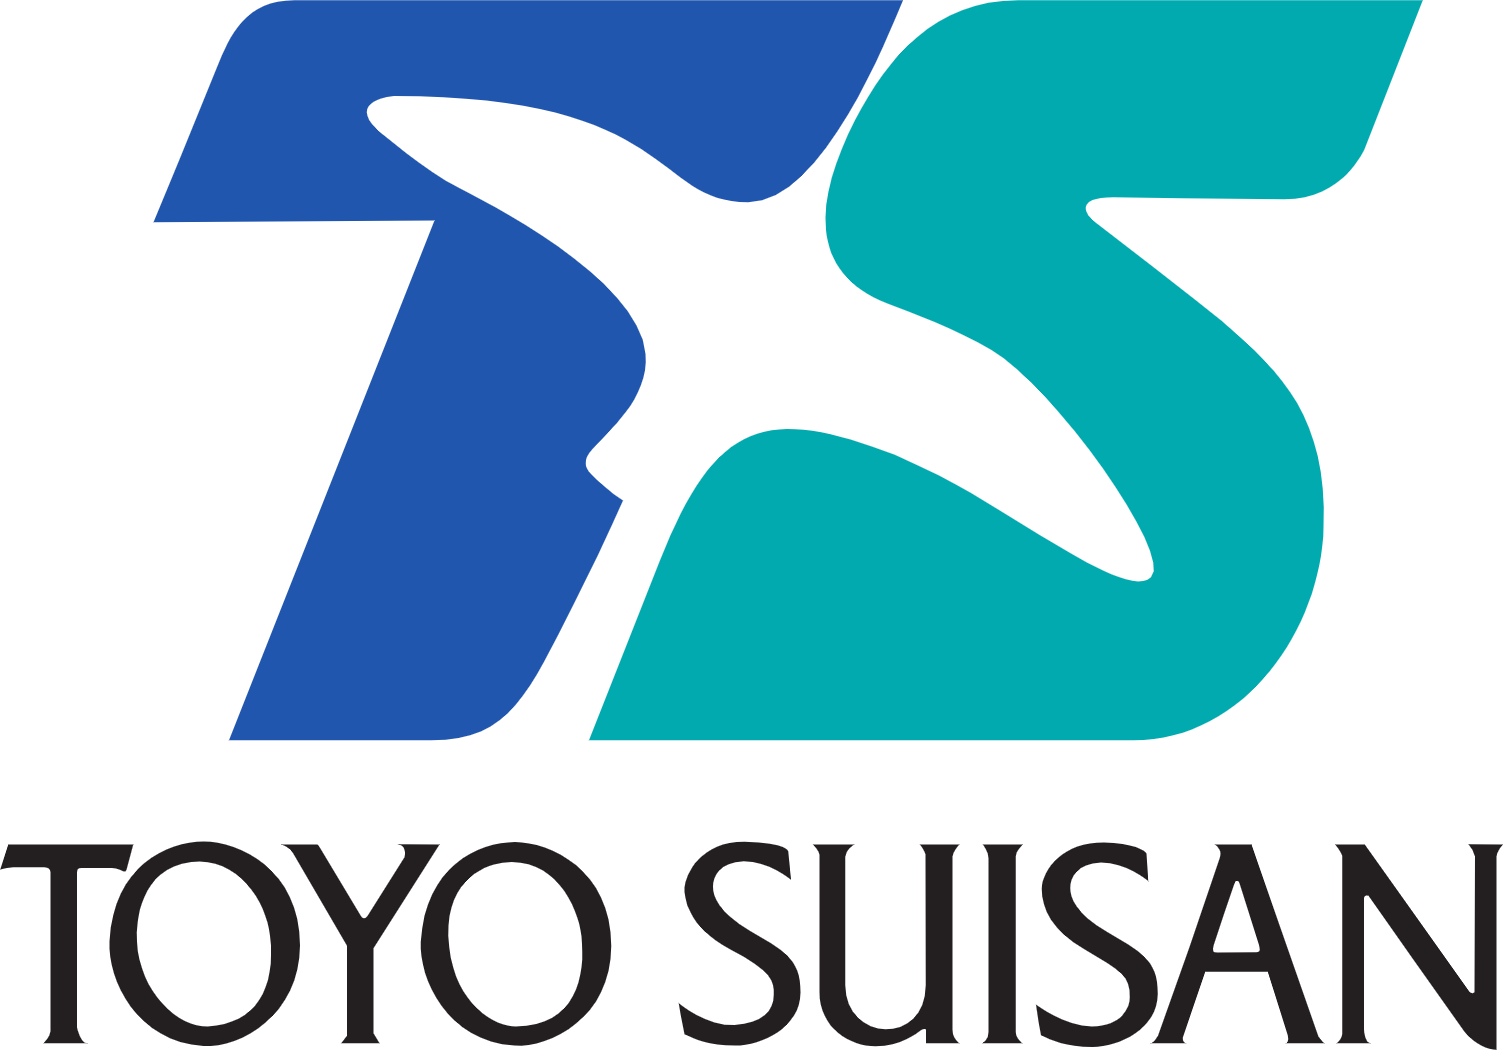 Toyo Suisan logo large (transparent PNG)